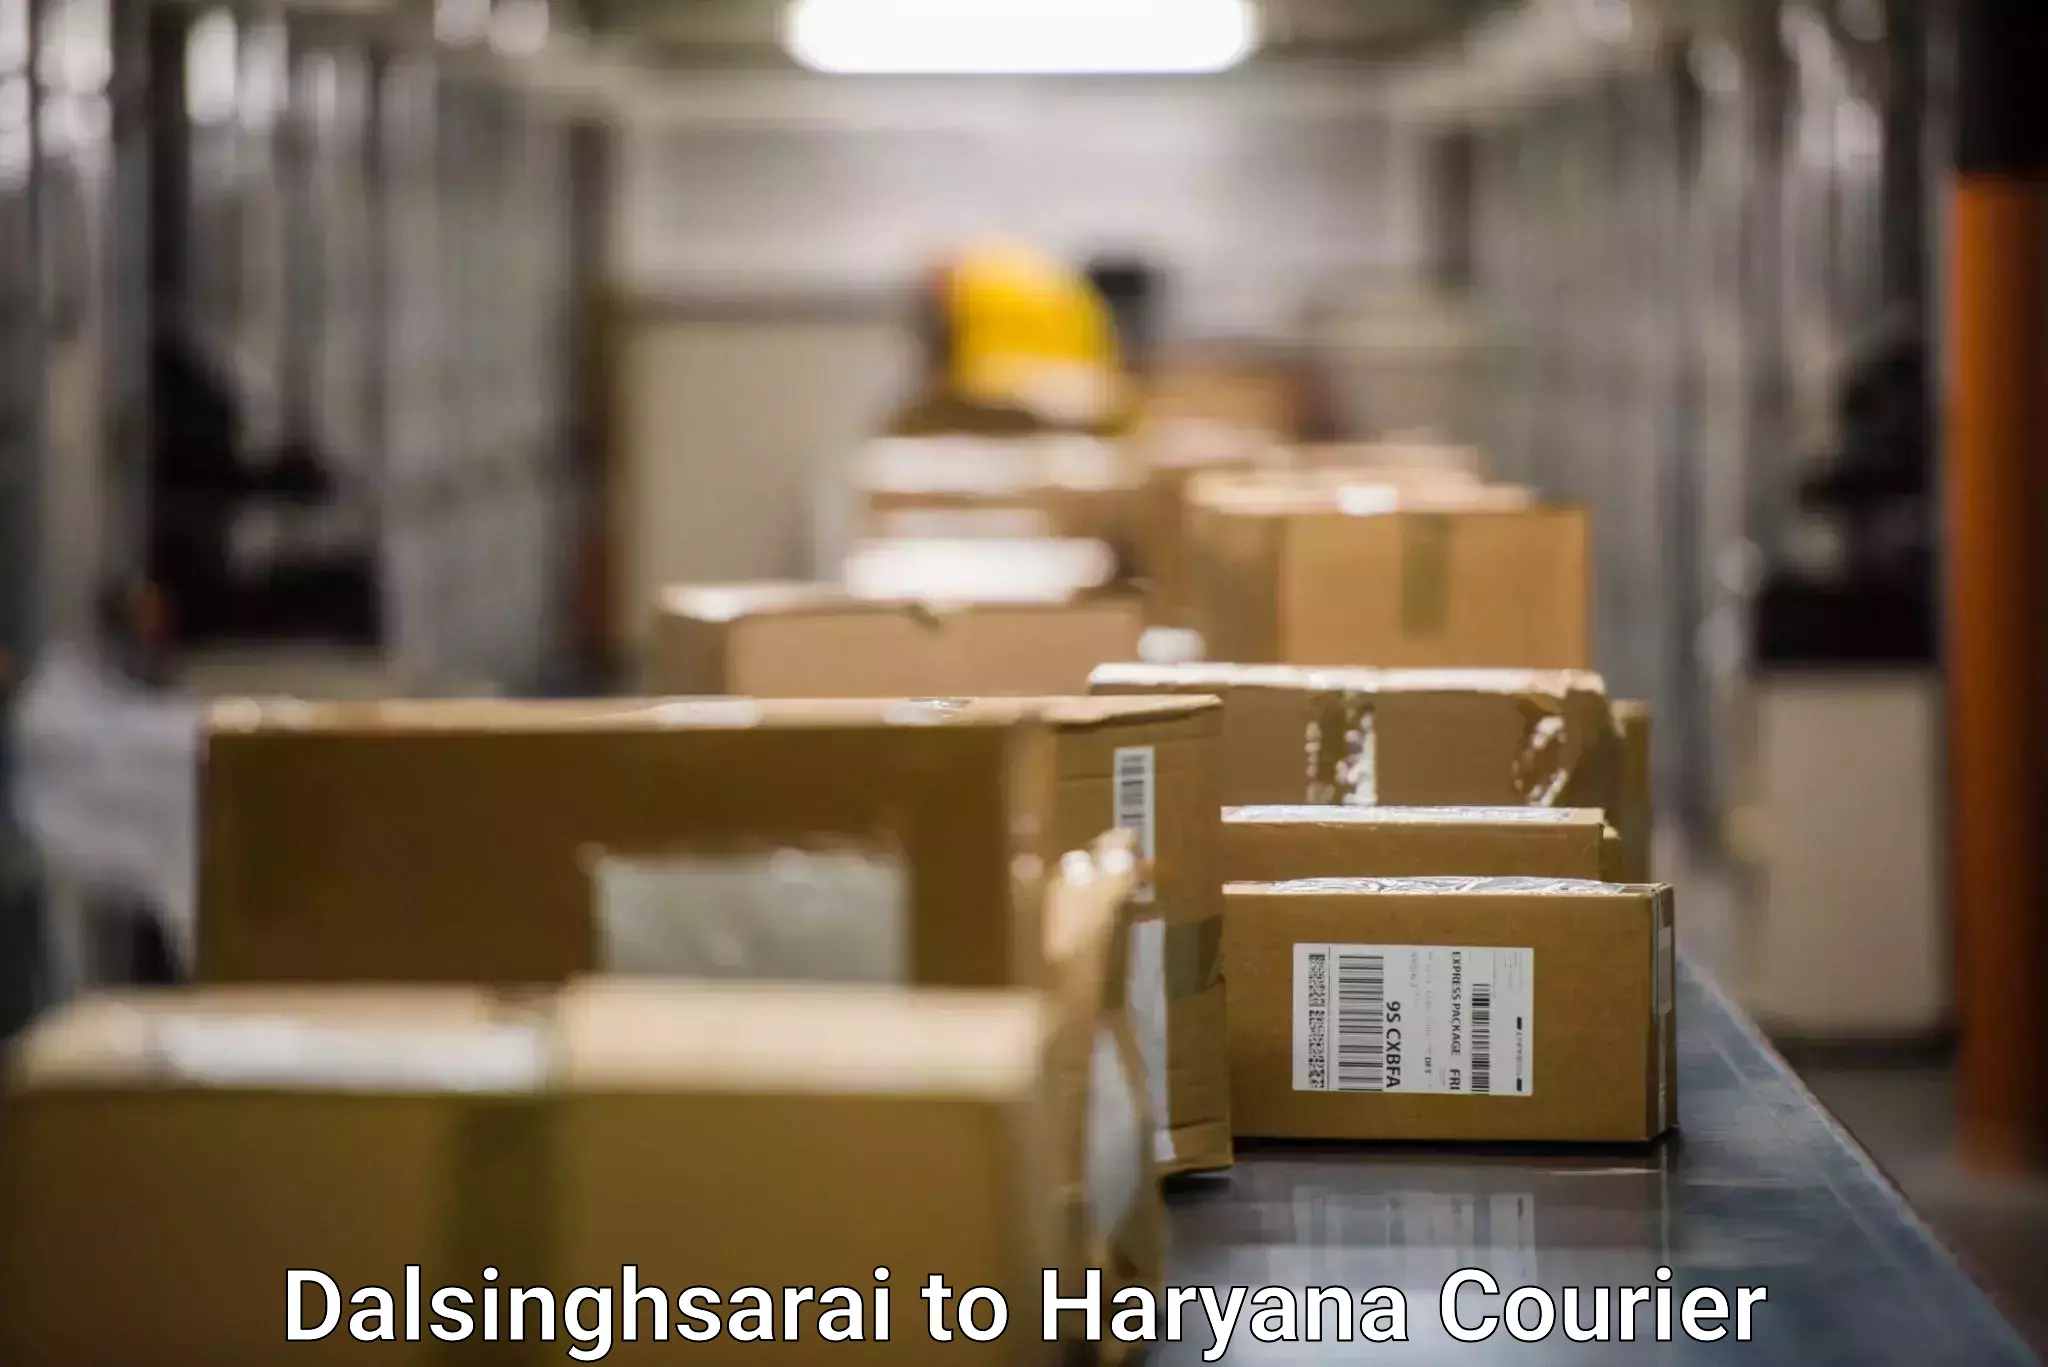 Supply chain efficiency Dalsinghsarai to Chaudhary Charan Singh Haryana Agricultural University Hisar